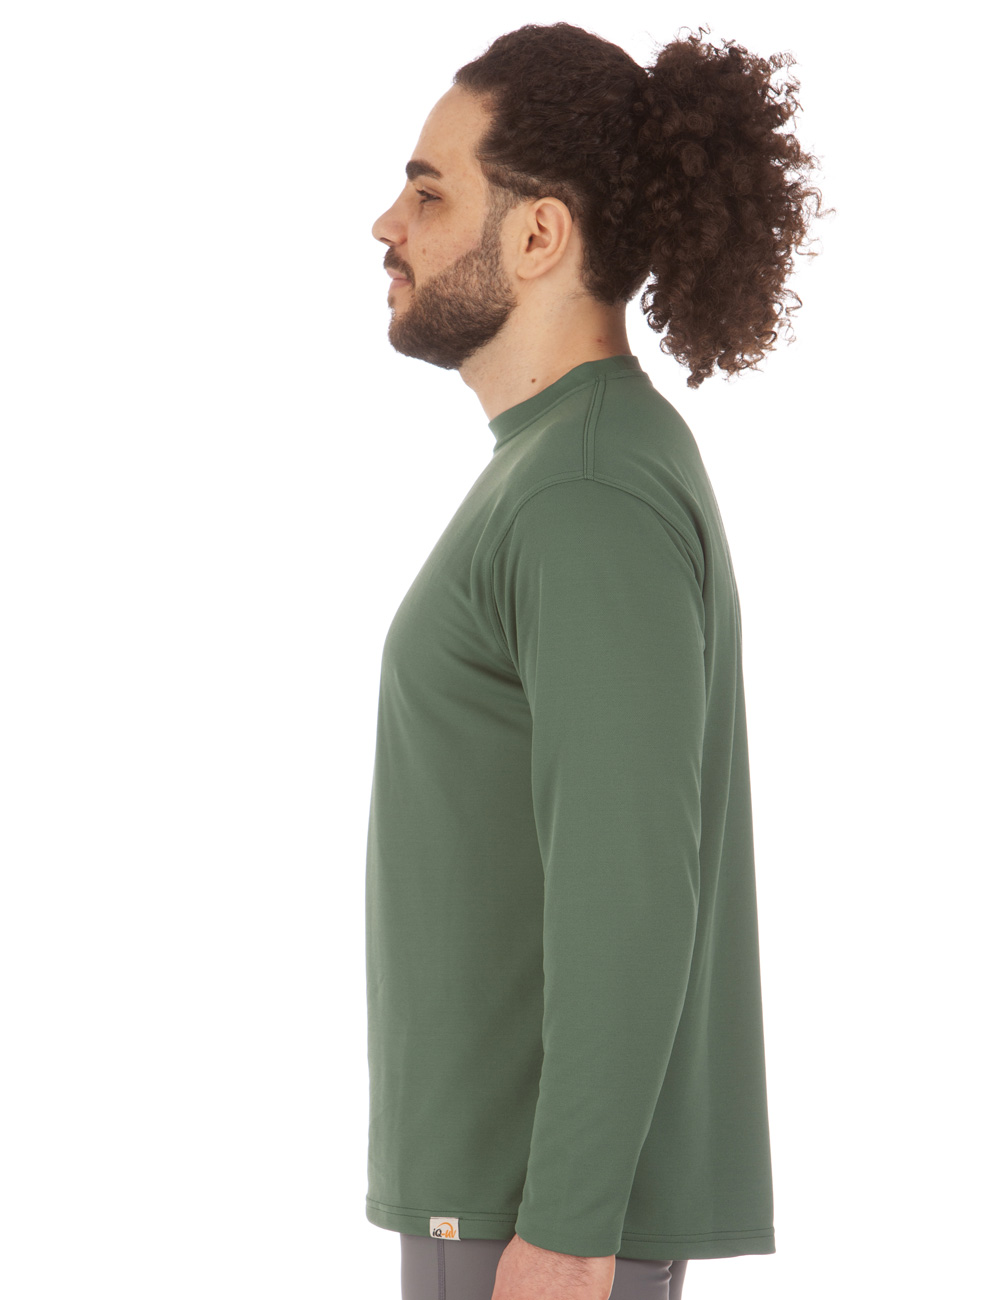 Herren UV 50+ T-Shirt langarm grün outdoor side